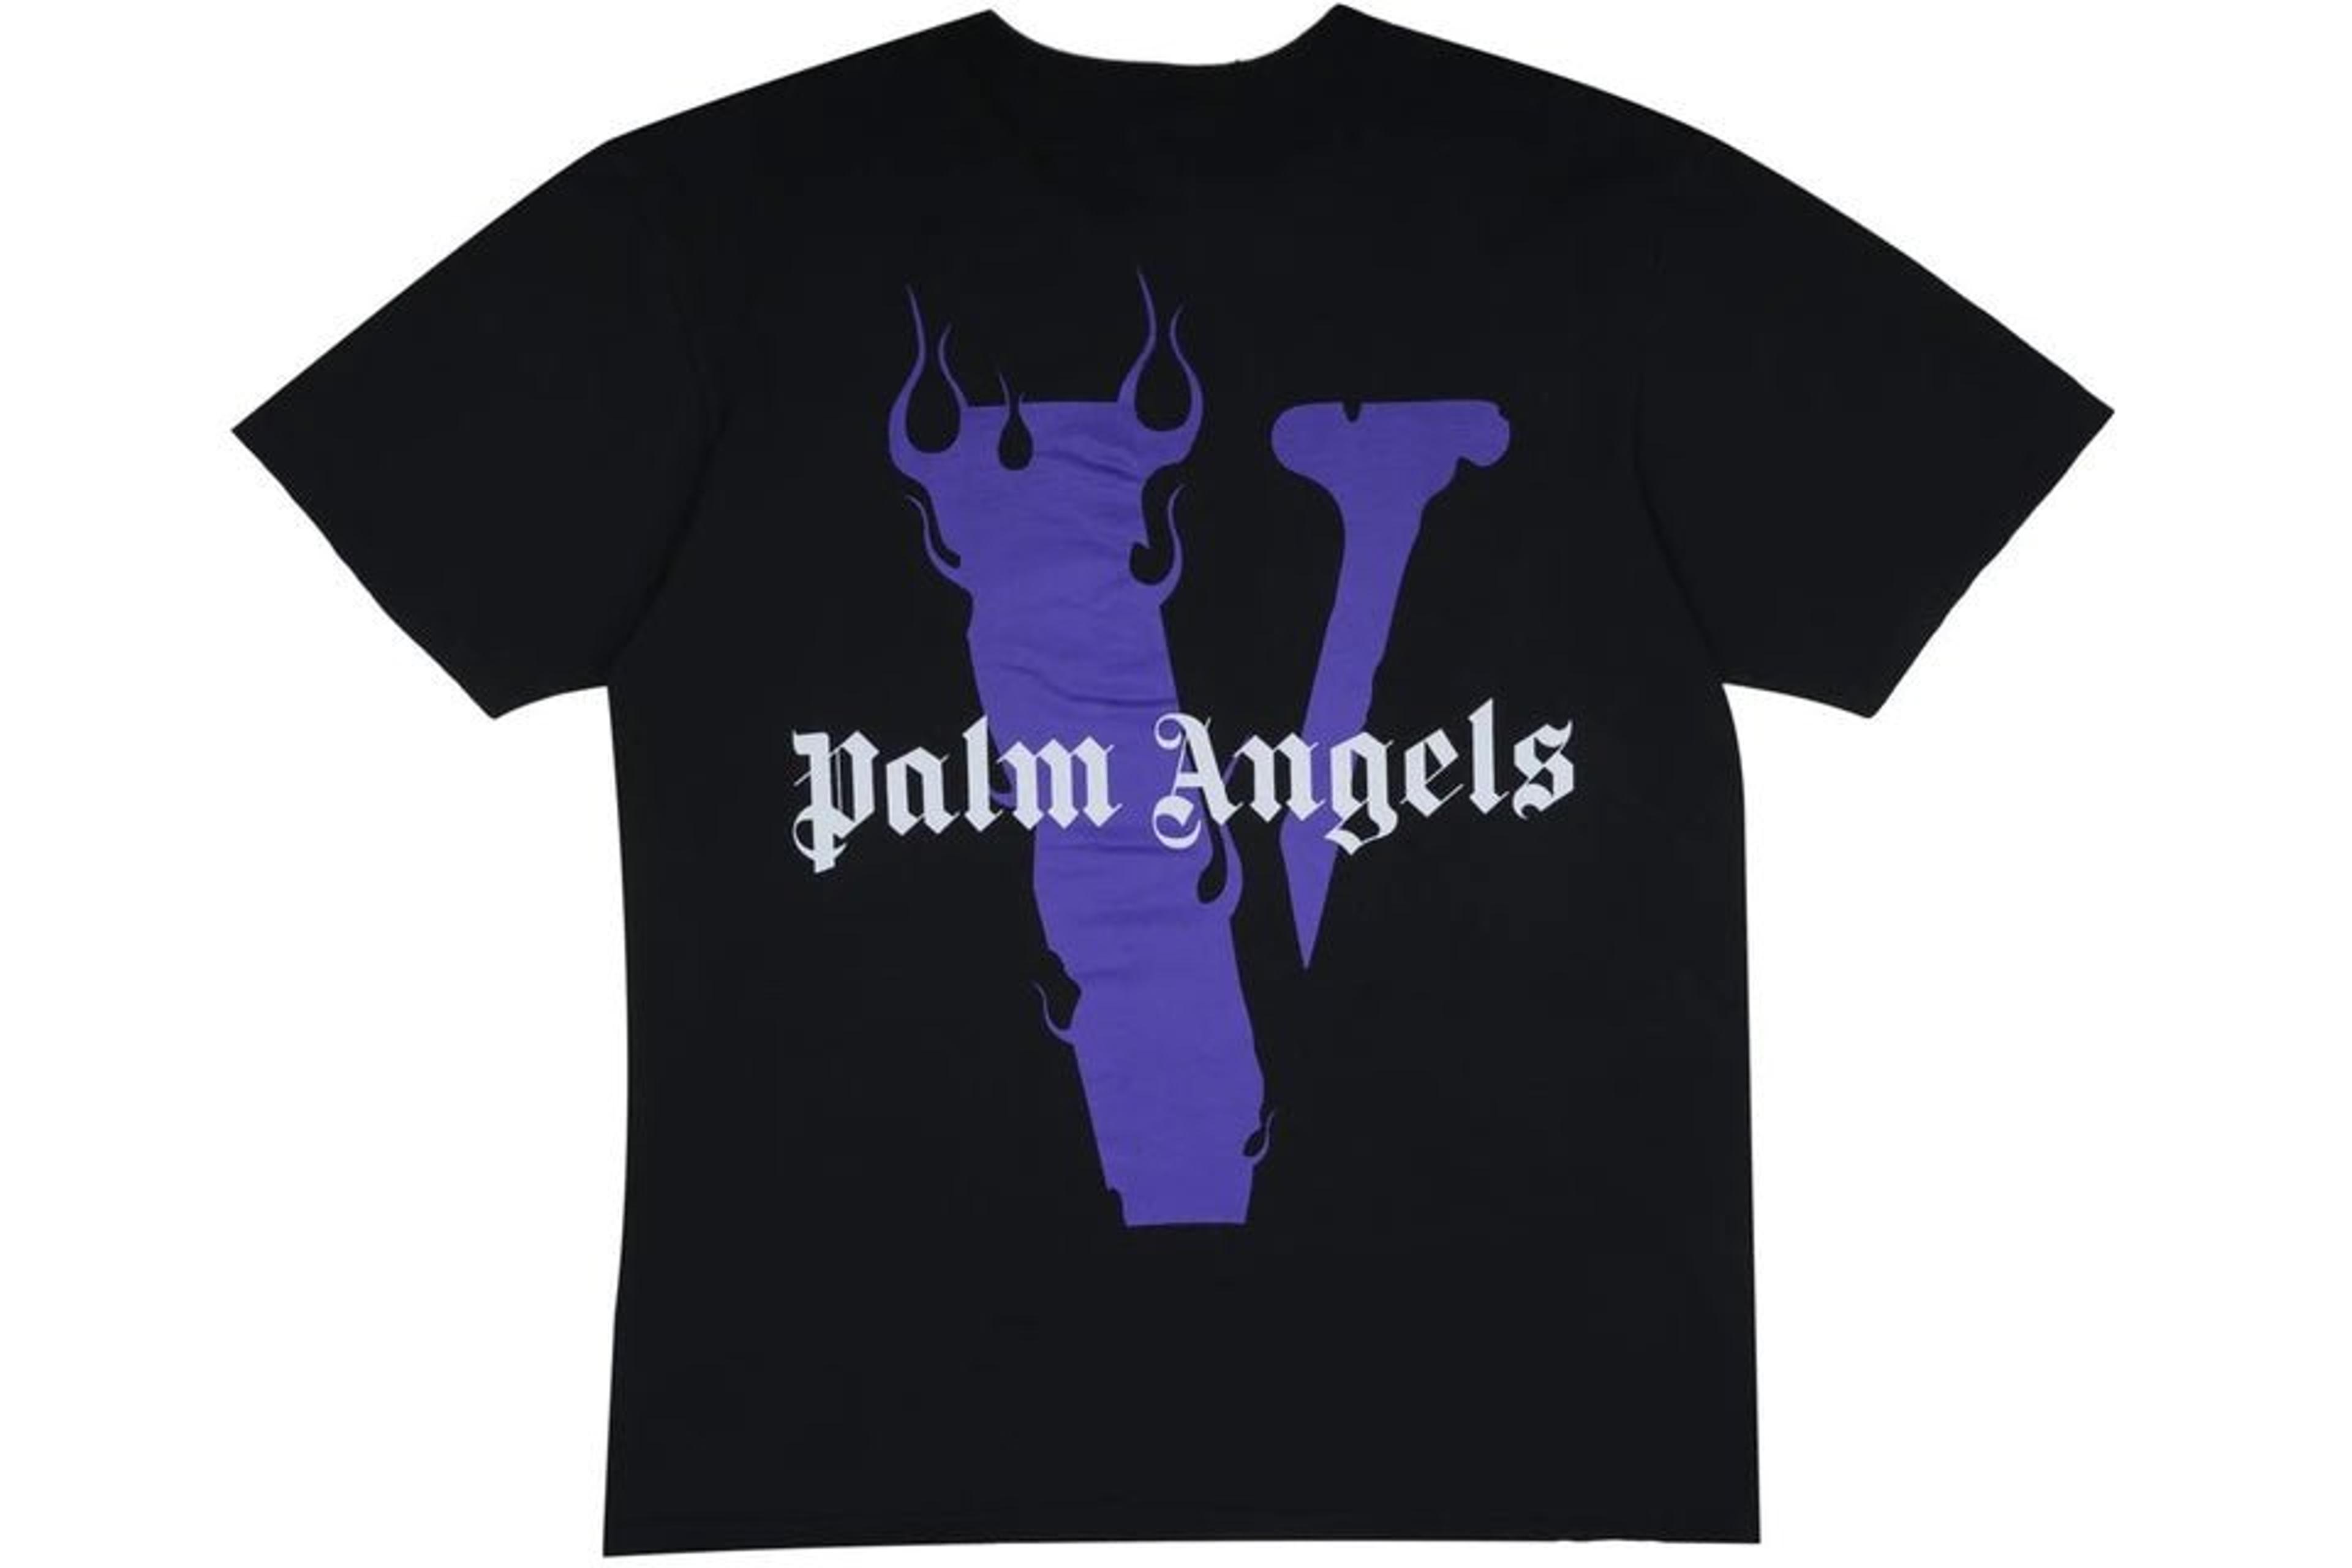 Vlone x Palm Angels T-Shirt - Black / Purple